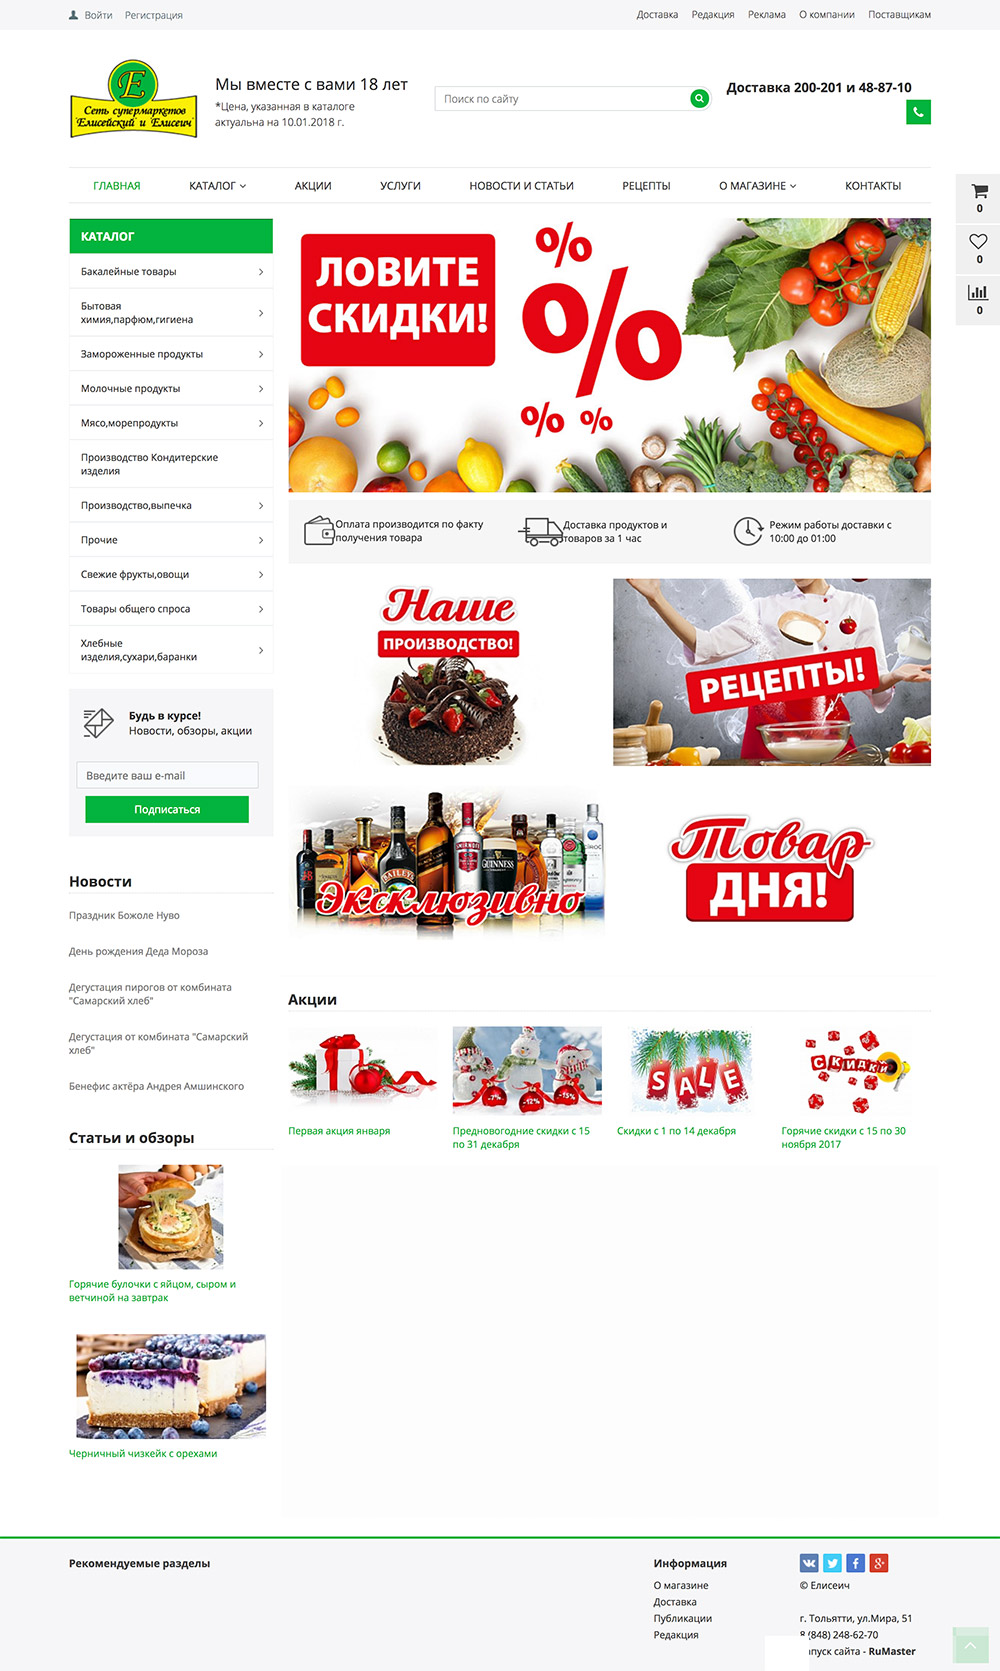 сайт-витрина сети супермаркетов «елисечйский» и «елисеич»